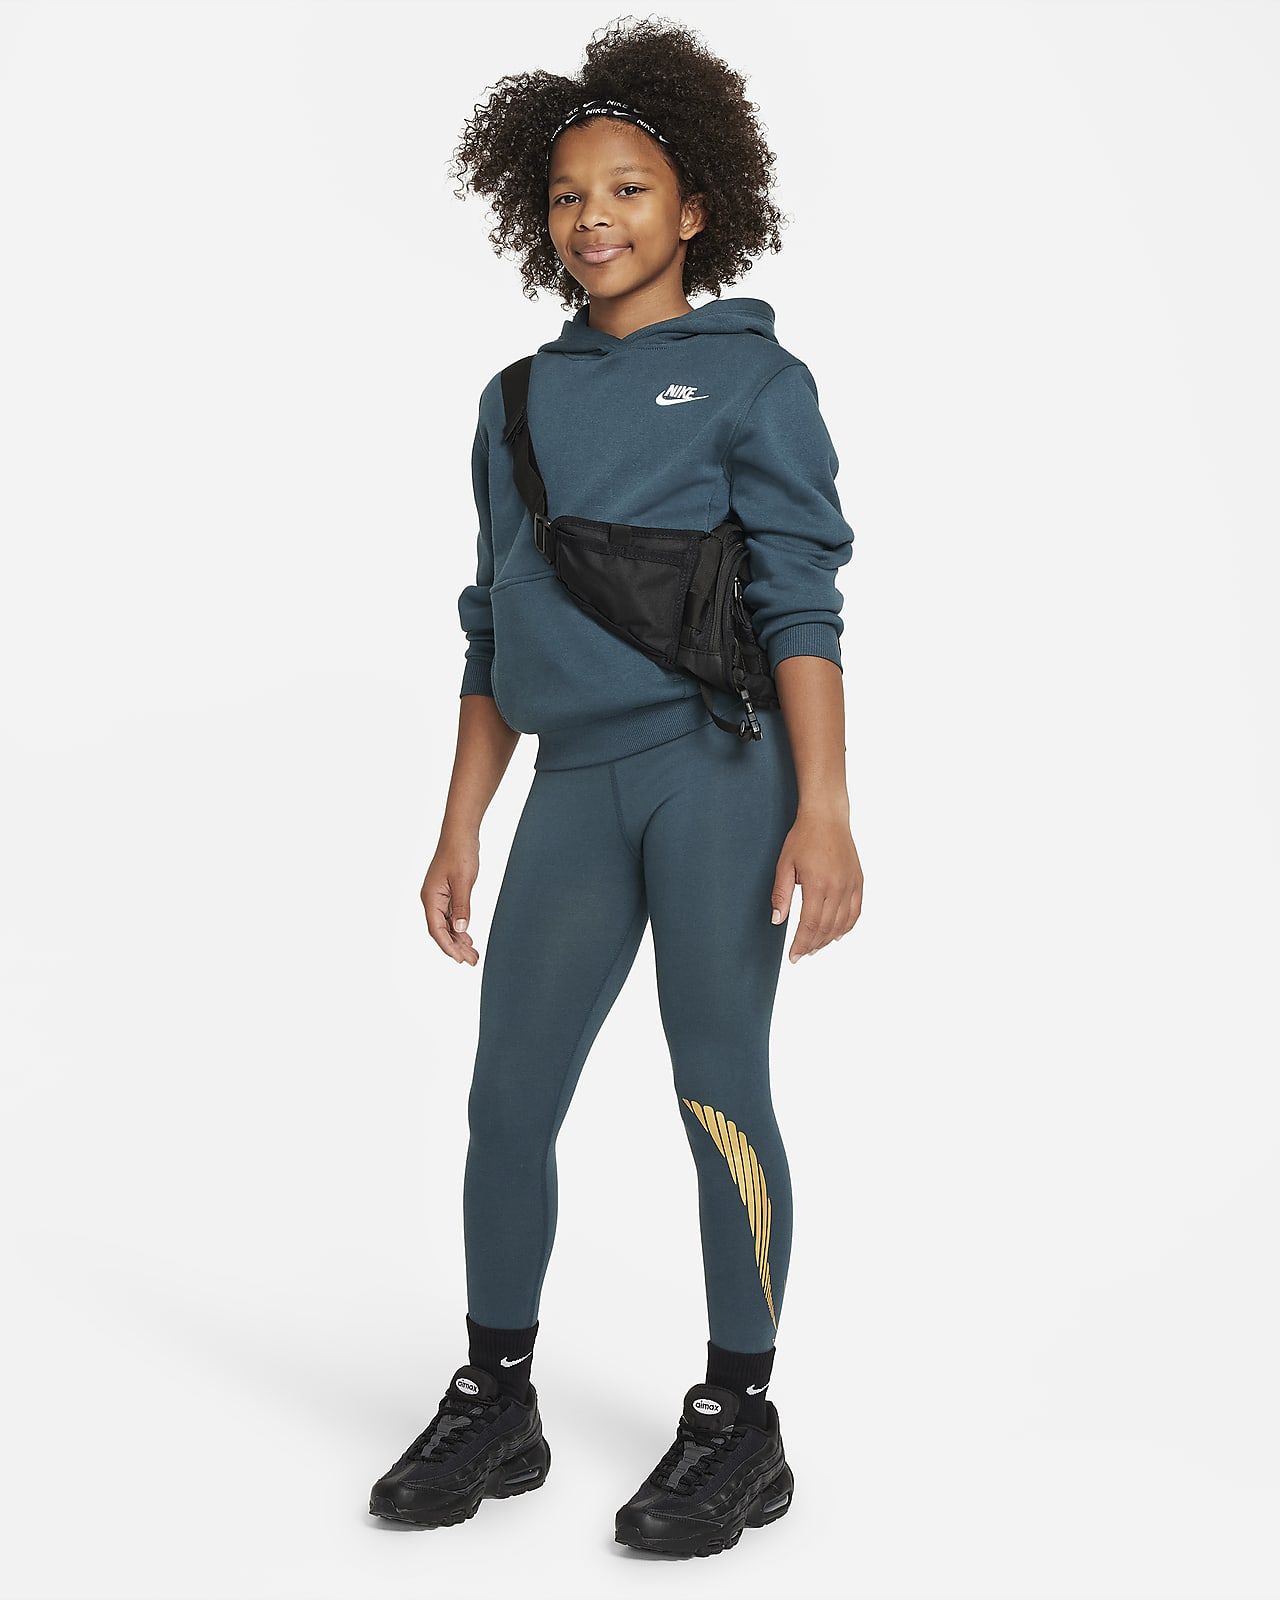 Nike, Tights & leggings, Sportswear, Child & baby